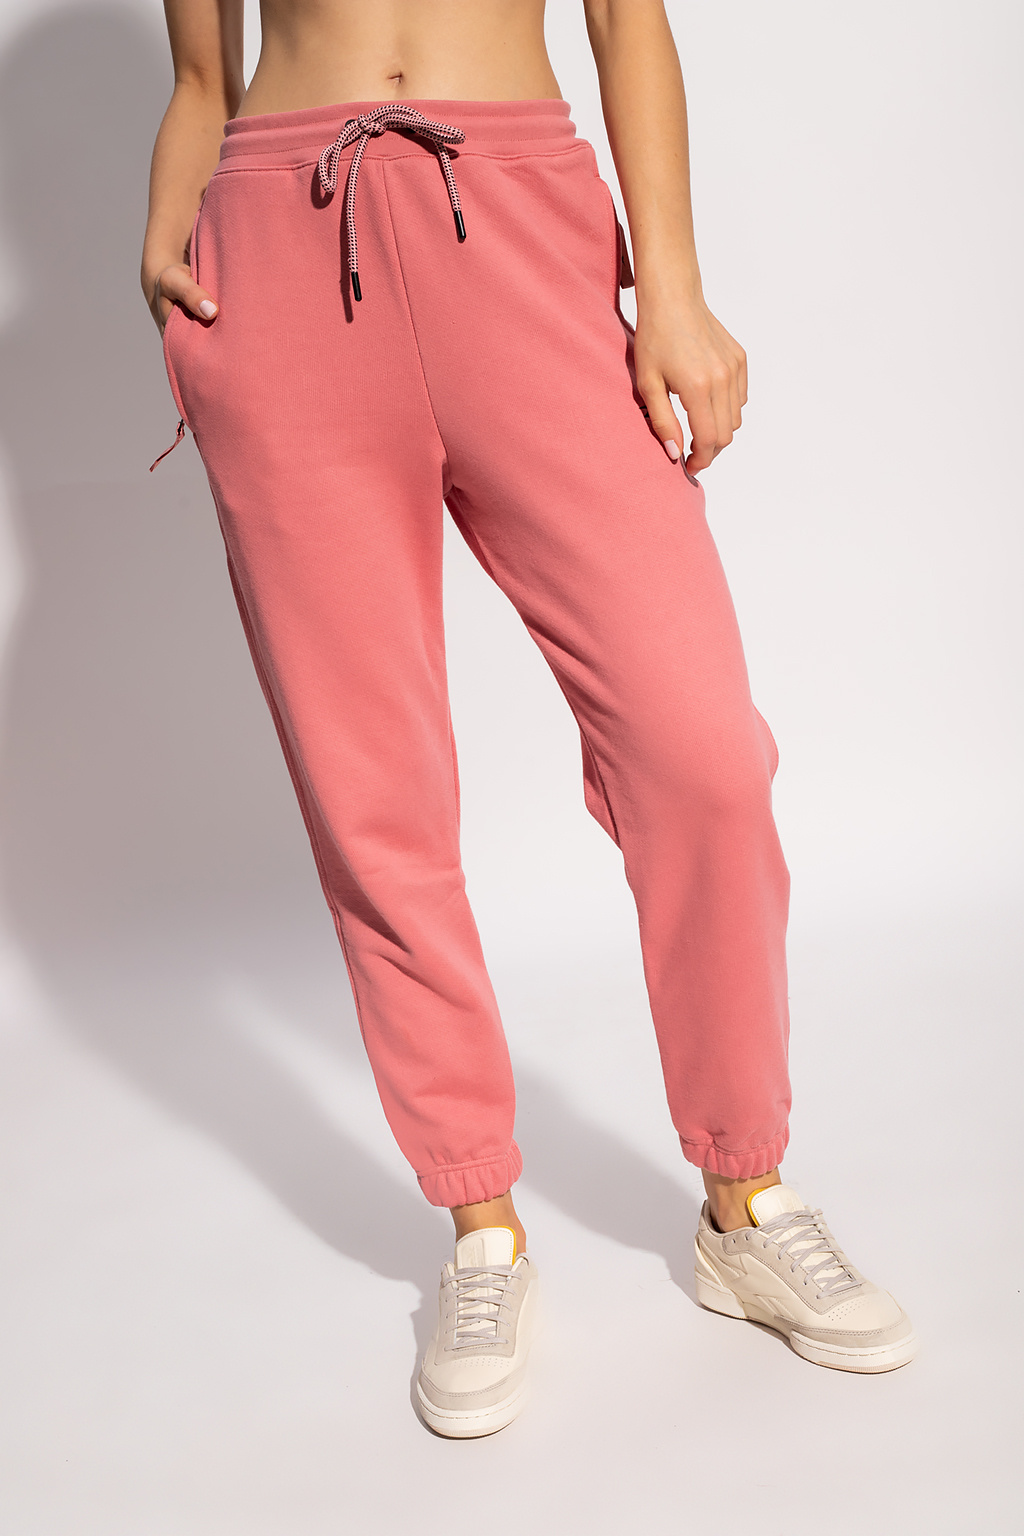 jorden Lår Cornwall Pink Sweatpants with logo Reebok x Victoria Beckham - Vitkac Germany